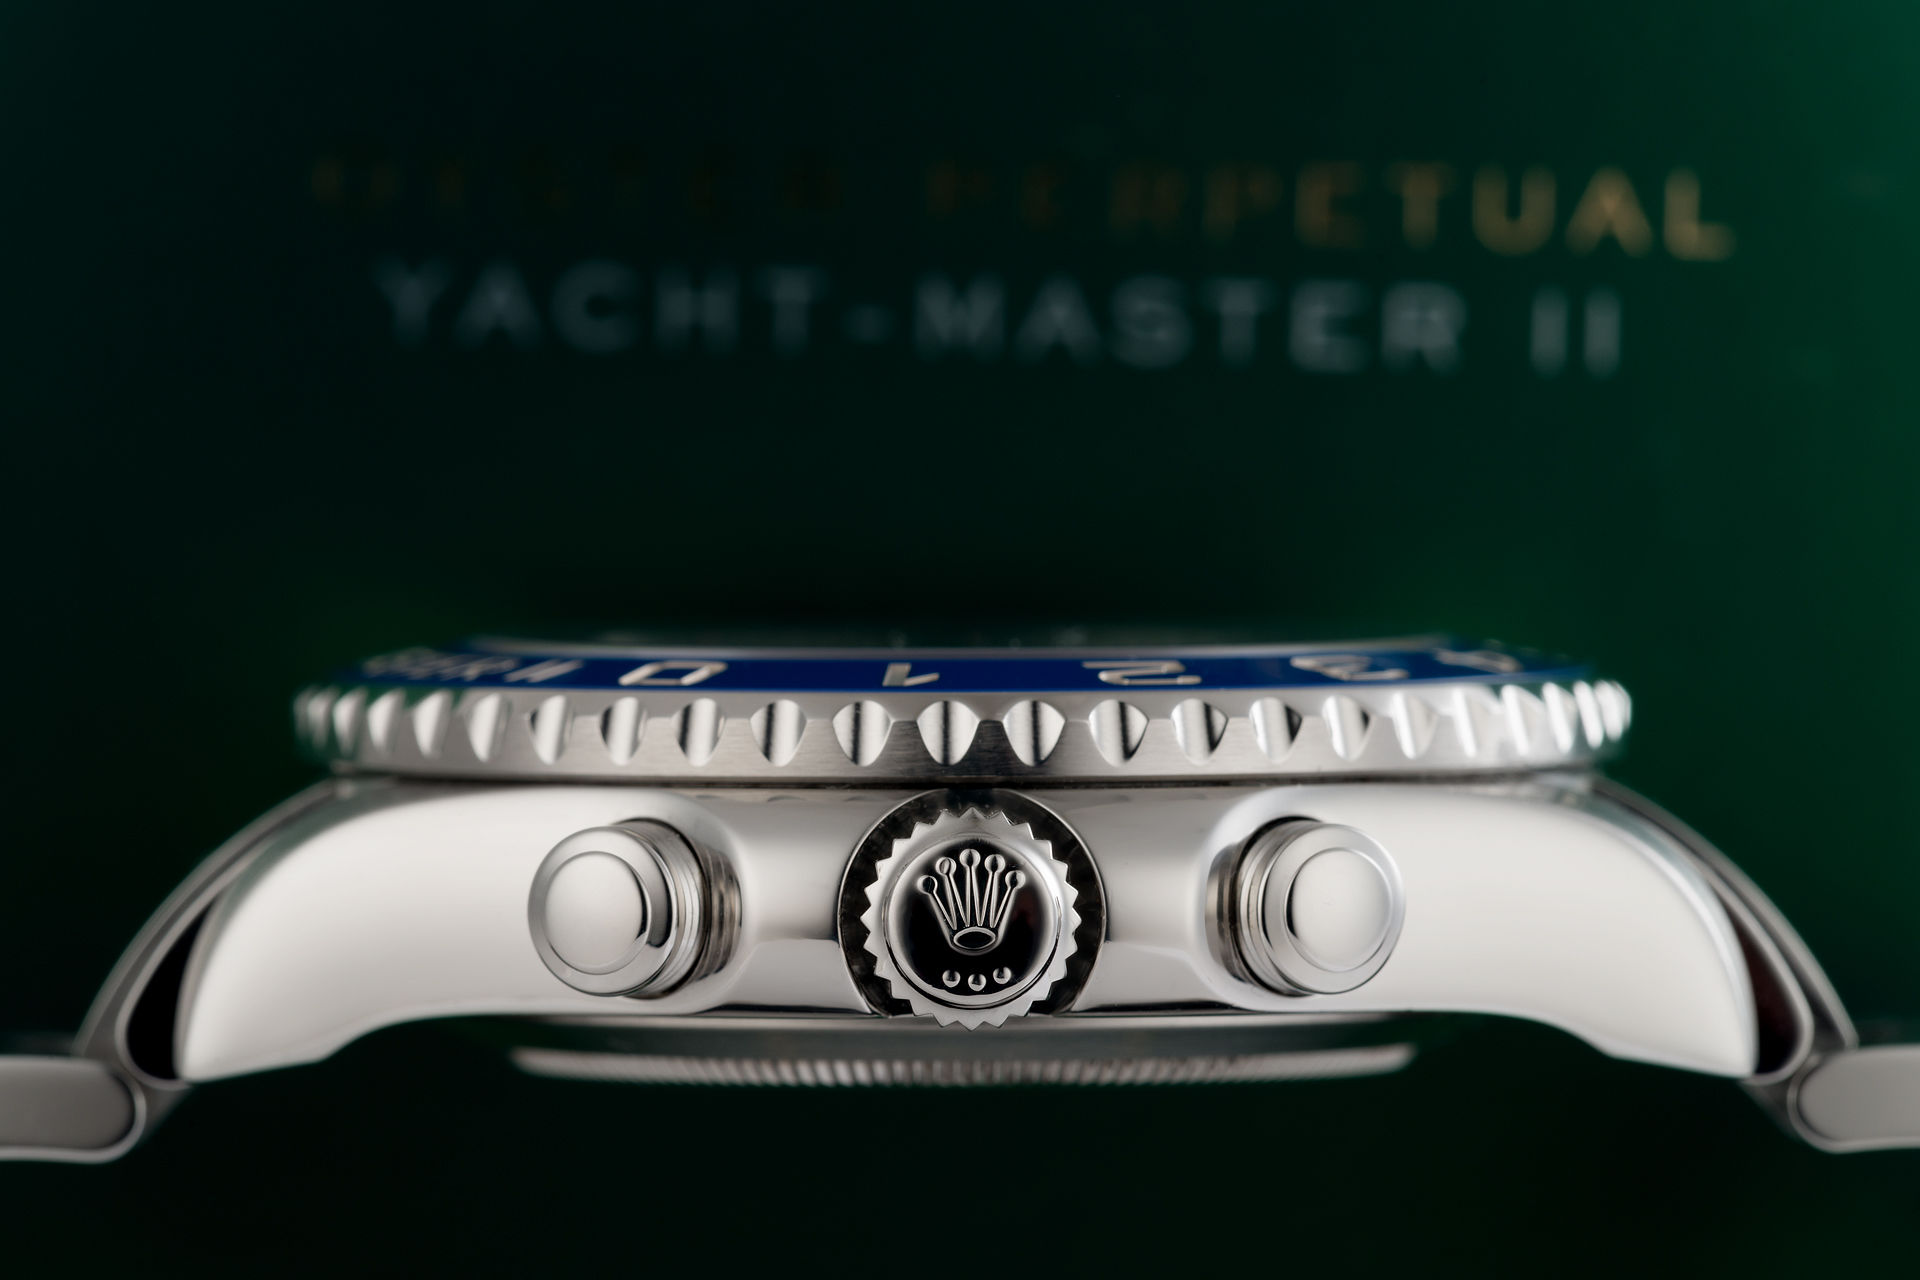 ref 116680 | 44mm 'Regatta Chronograph' | Rolex Yacht-Master II